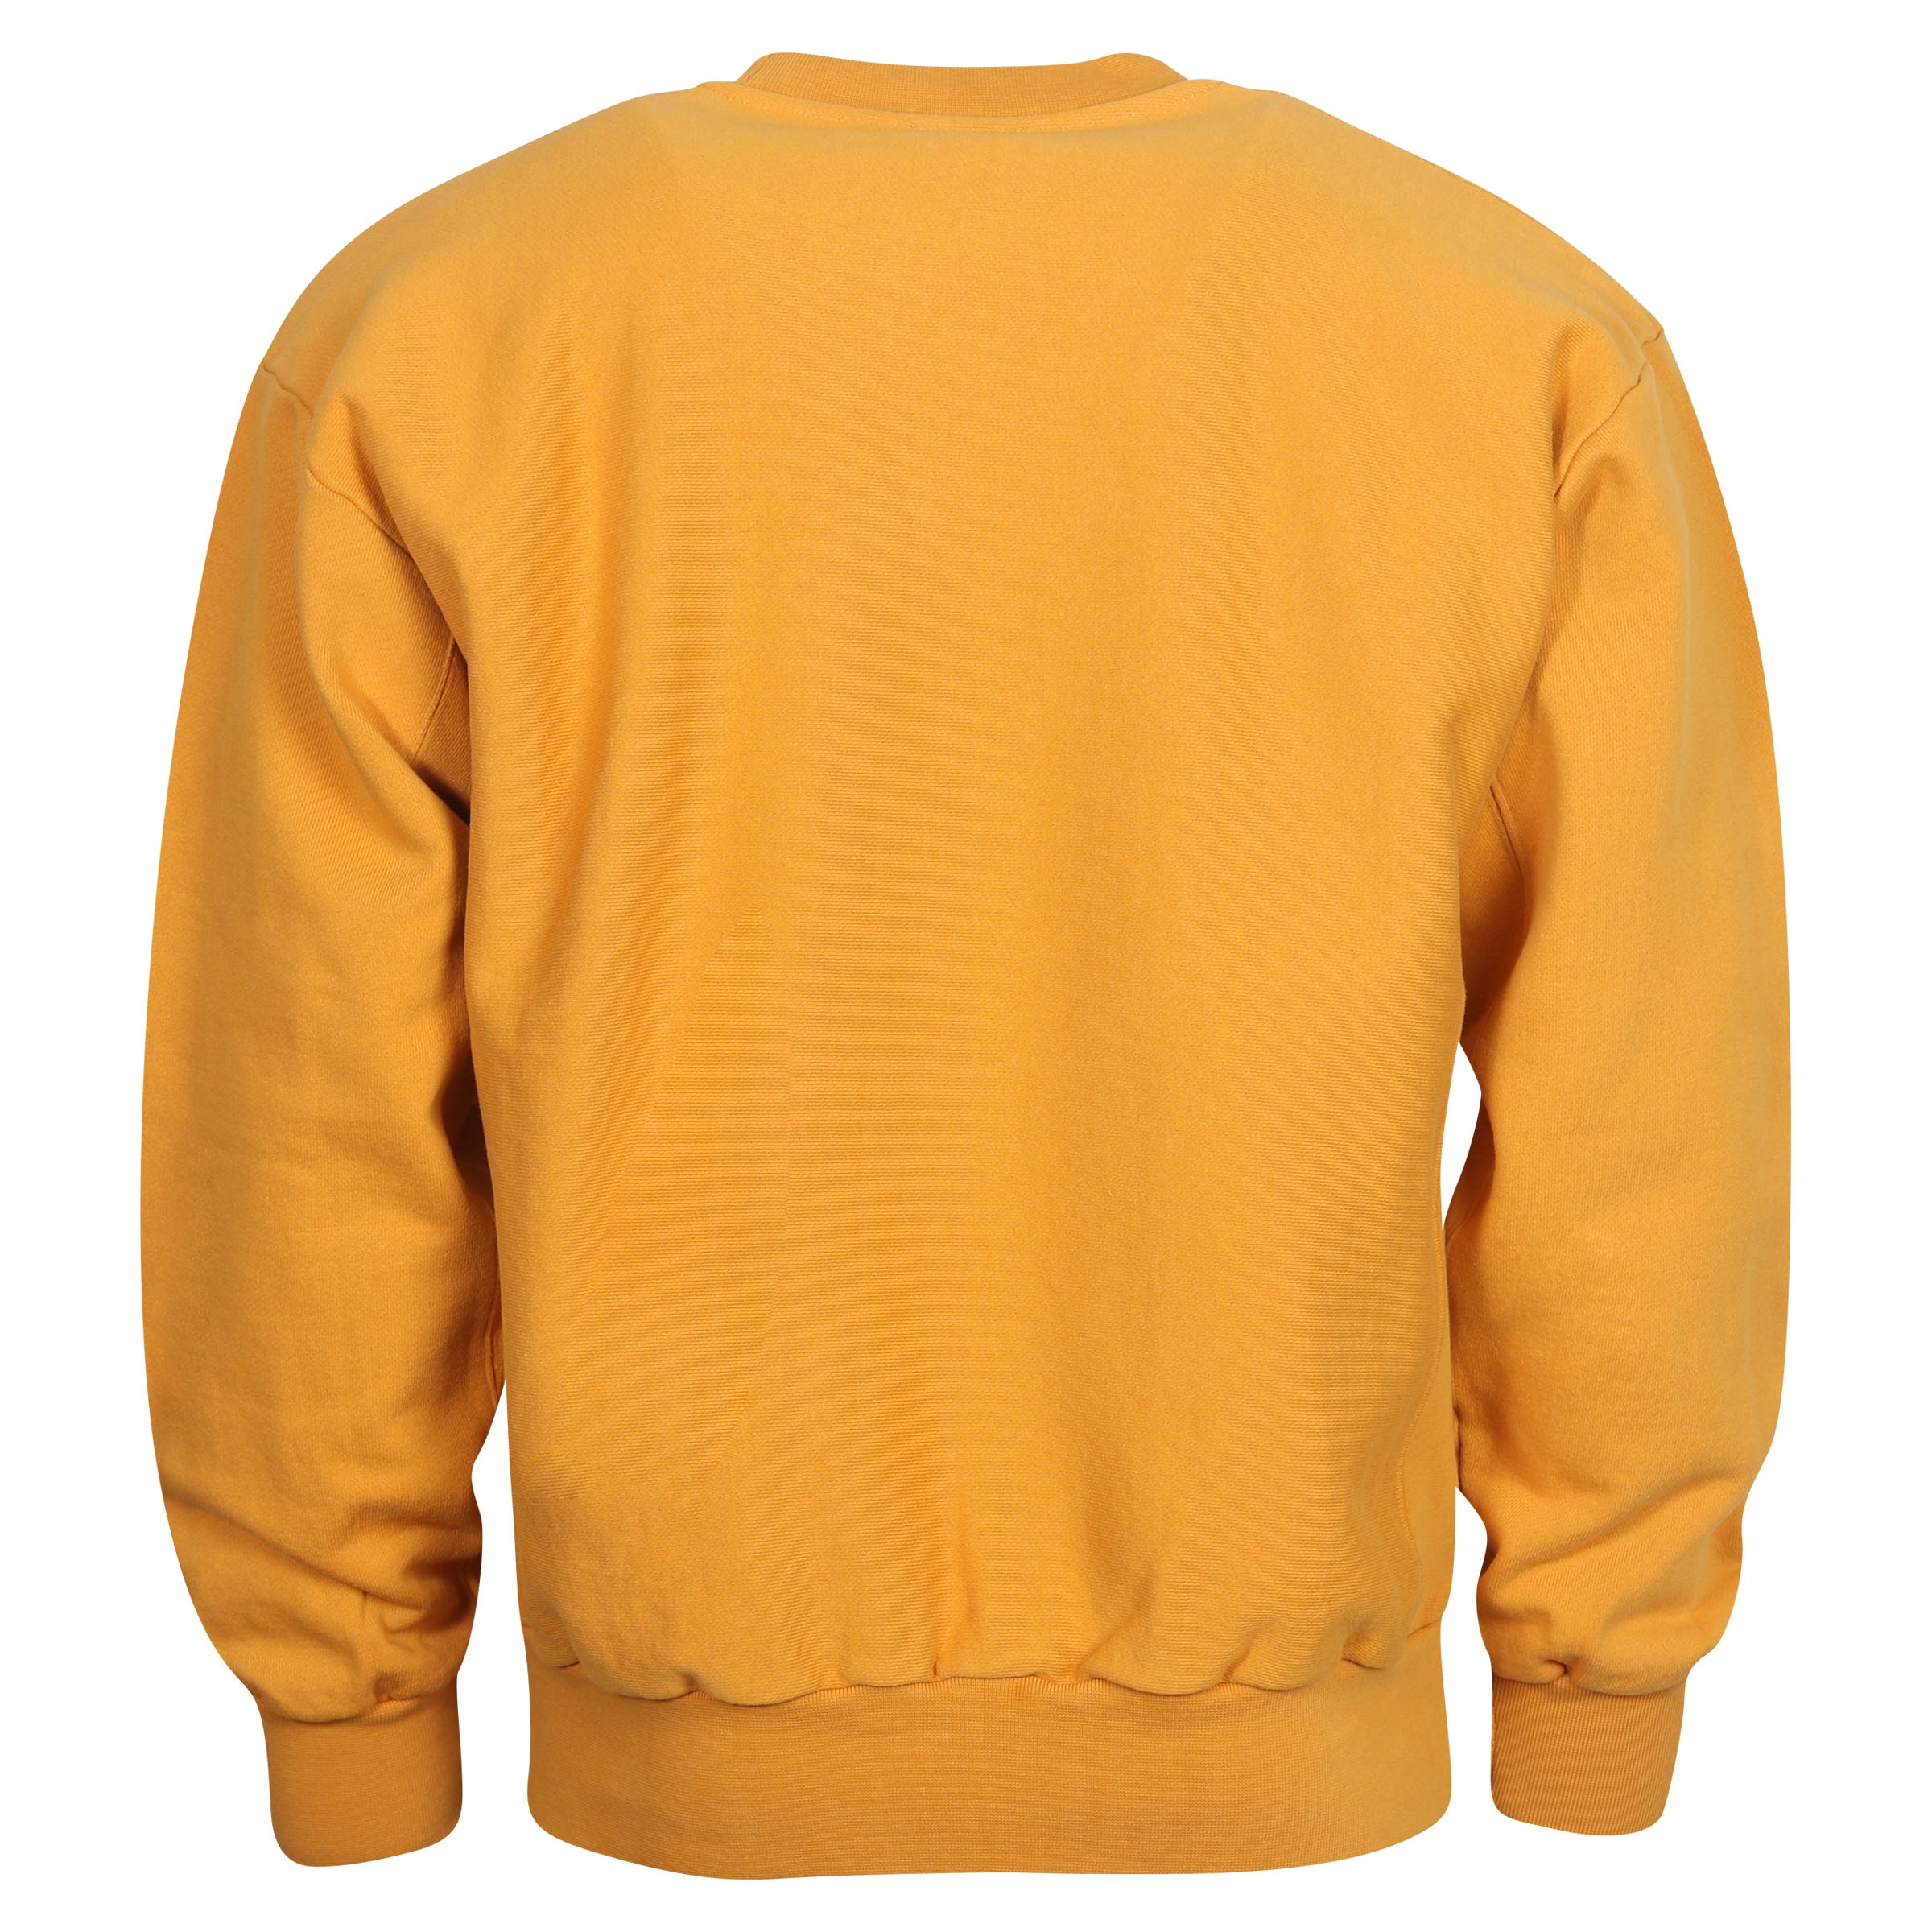 Unisex Aries Premium Temple Sweatshirt in Ochre